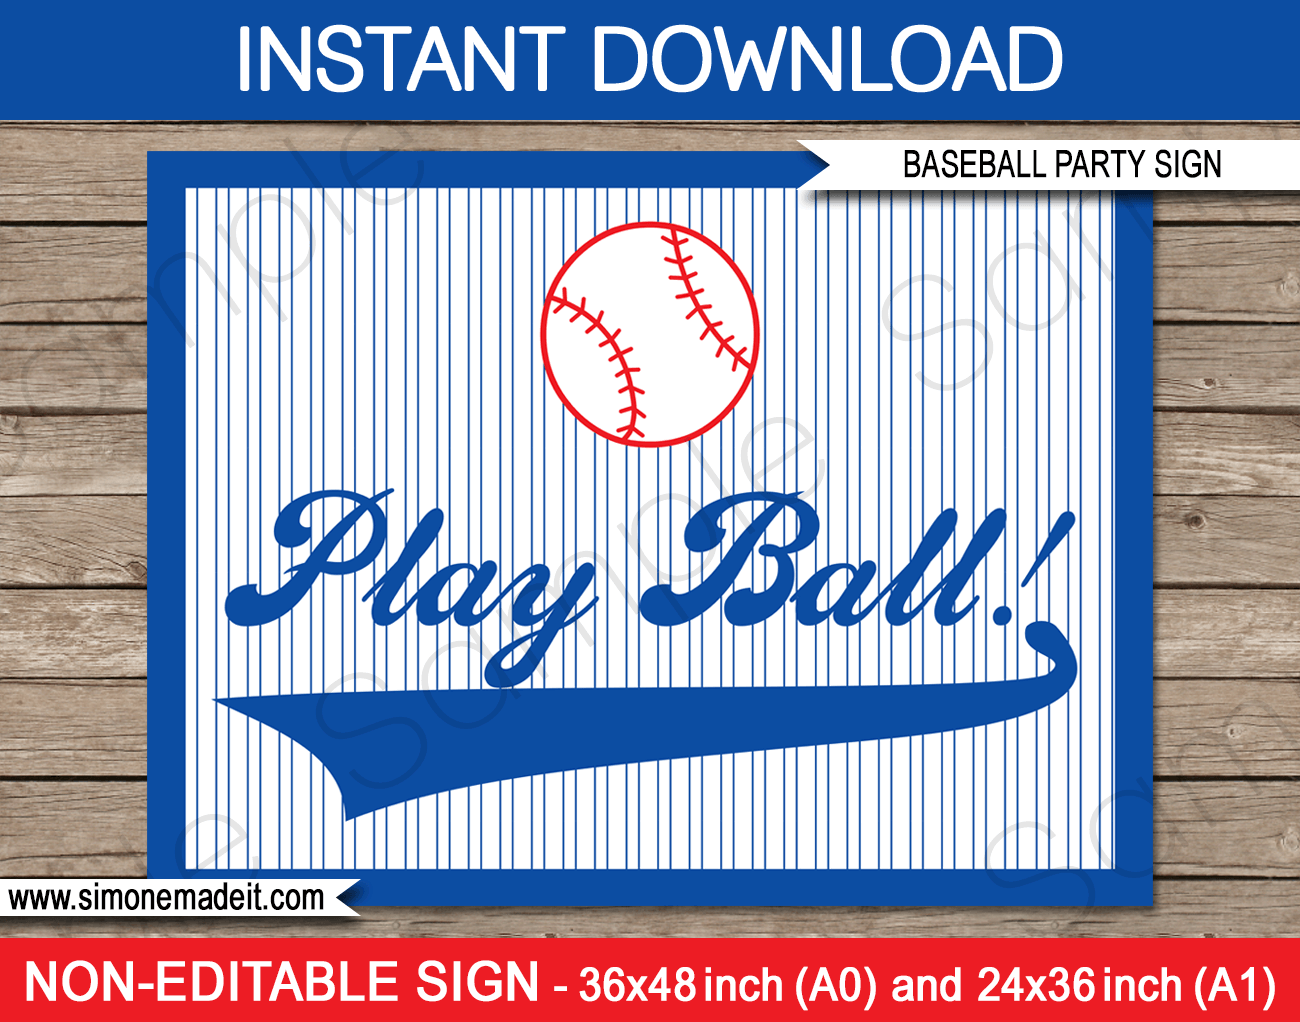 Baseball Party Sign | Play Ball | Printable Template | 36x48 inches | A0 | $4.00 via SIMONEmadeit.com